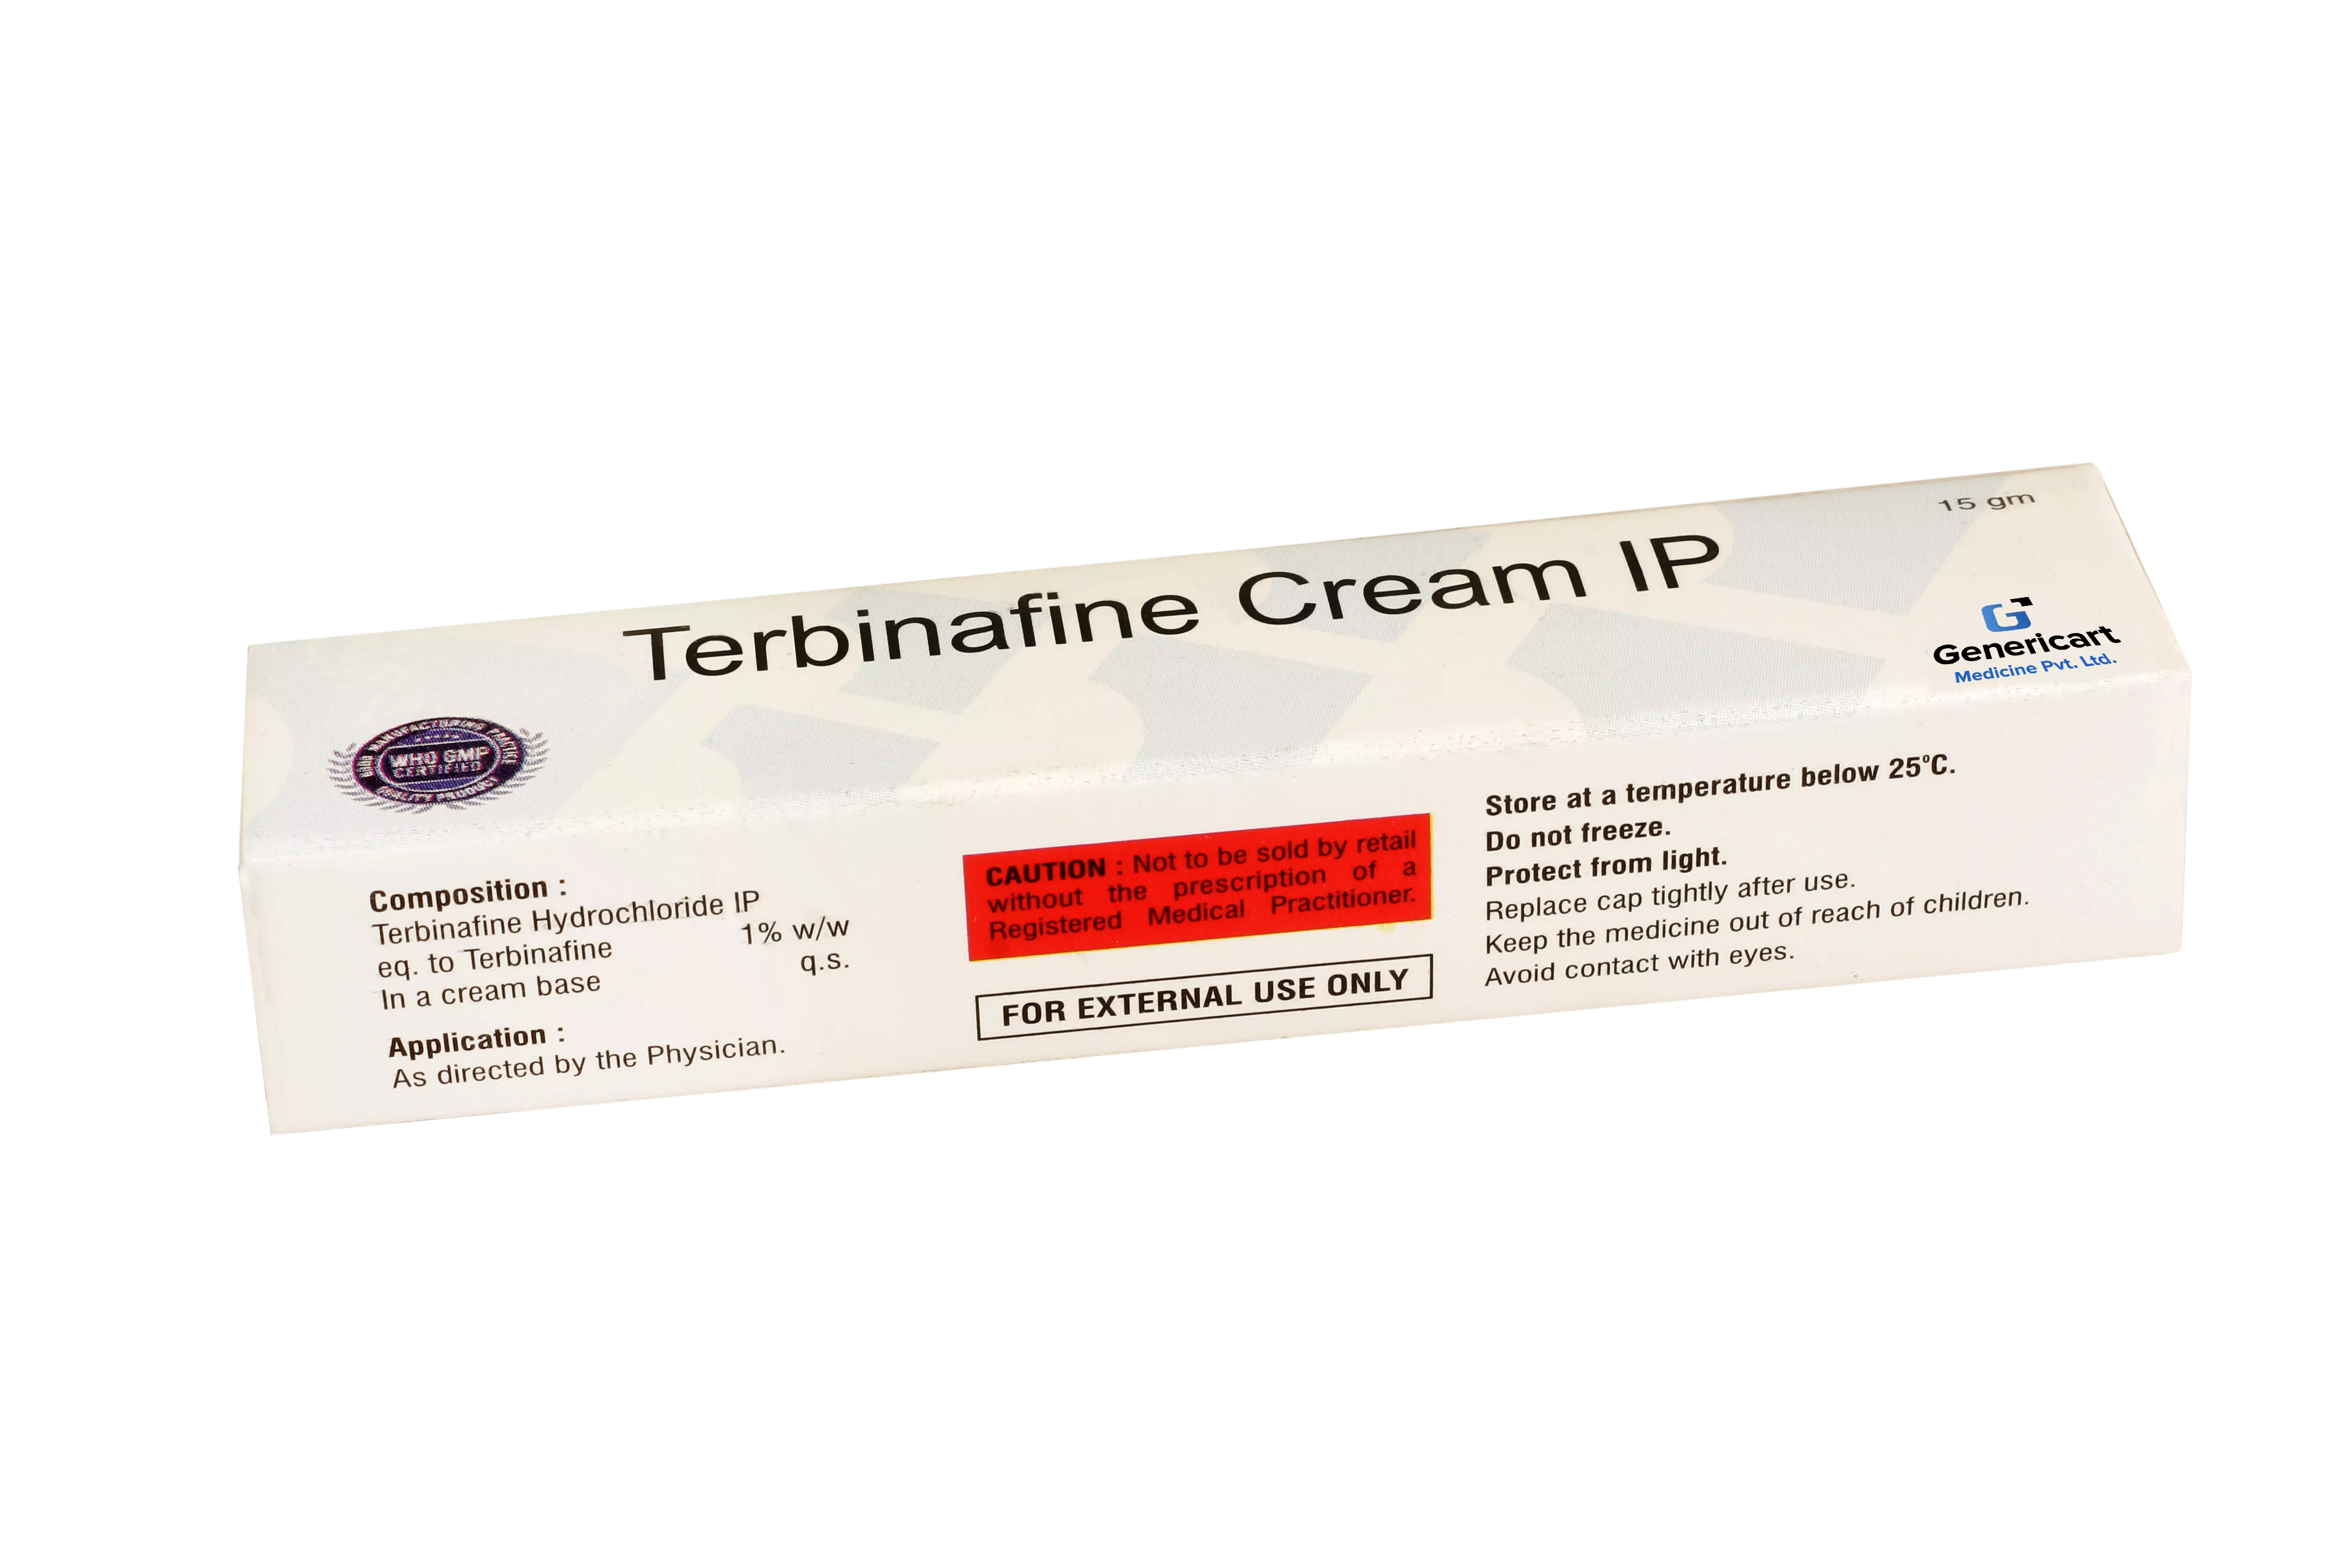 TERBINAFINE HYDROCHLORIDE 1% W/W - Genericart Products